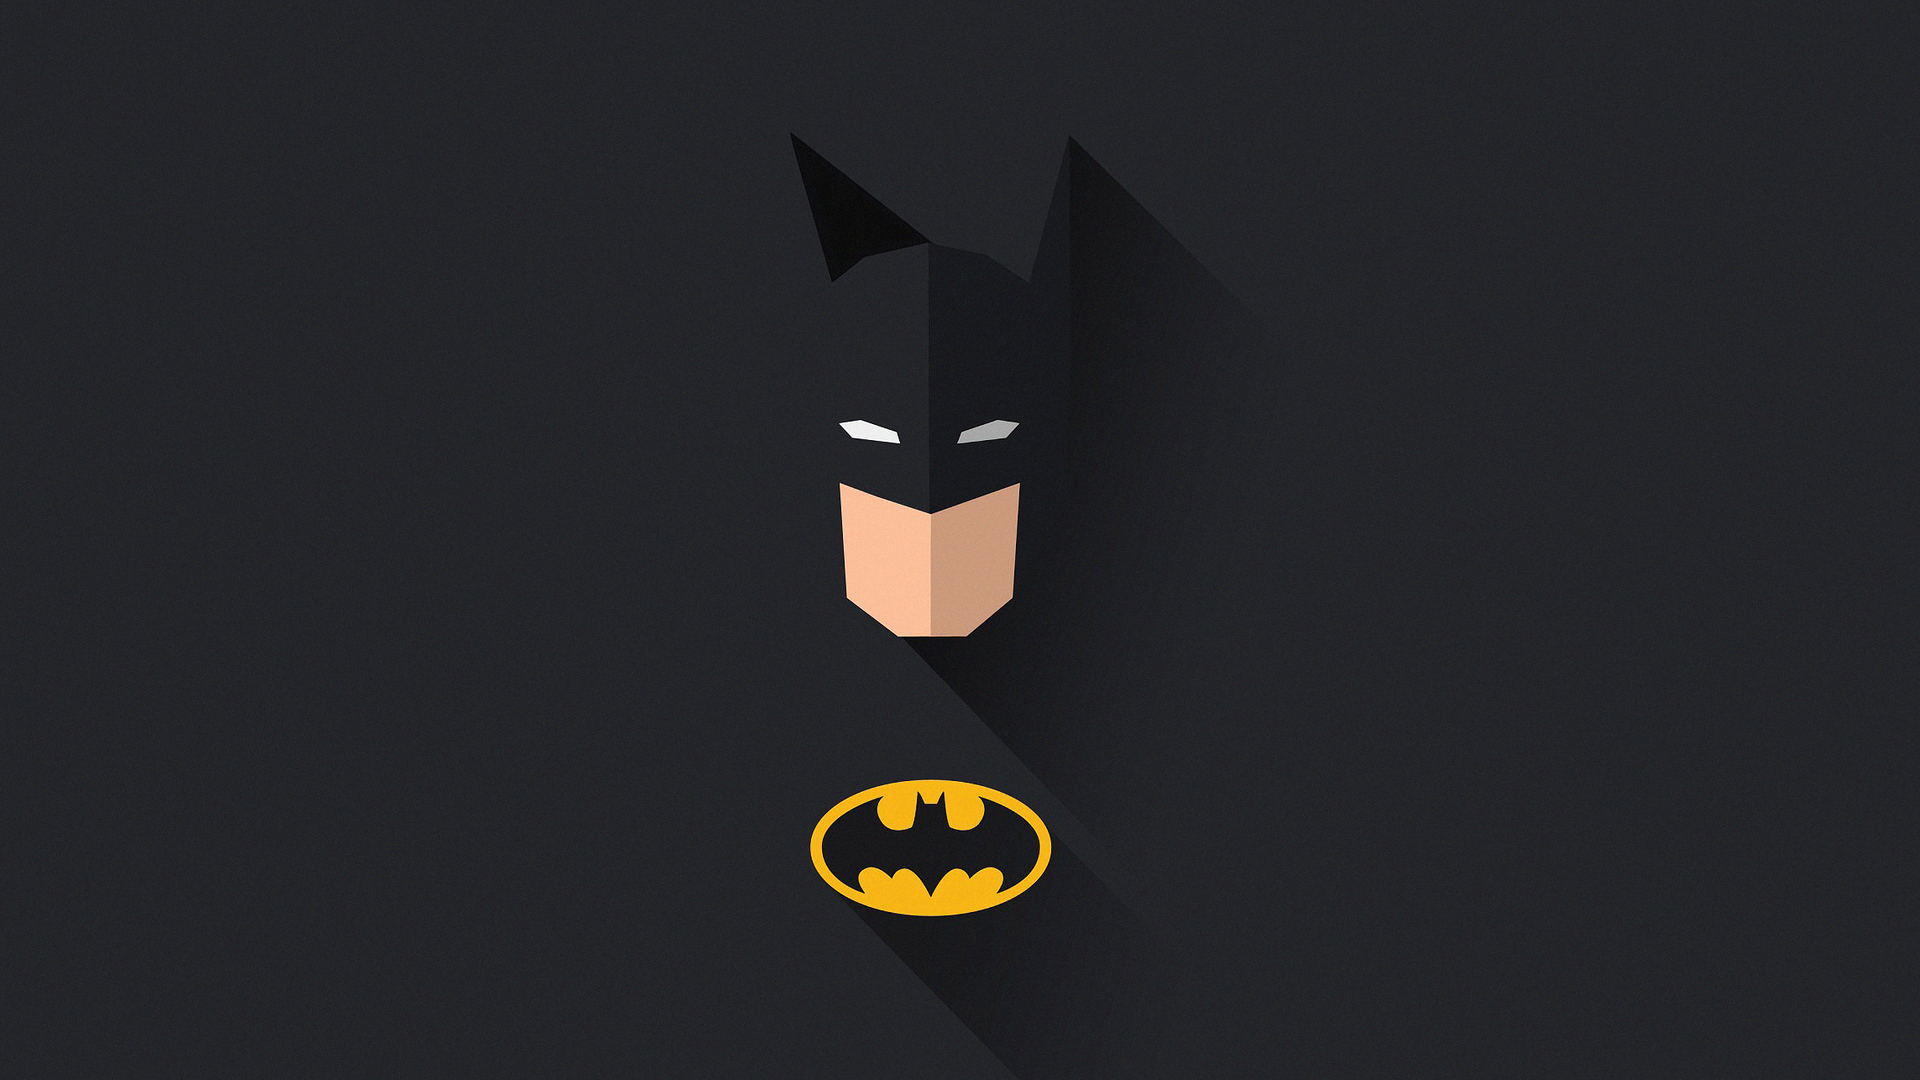 Batman Minimal Illustration Wallpapers